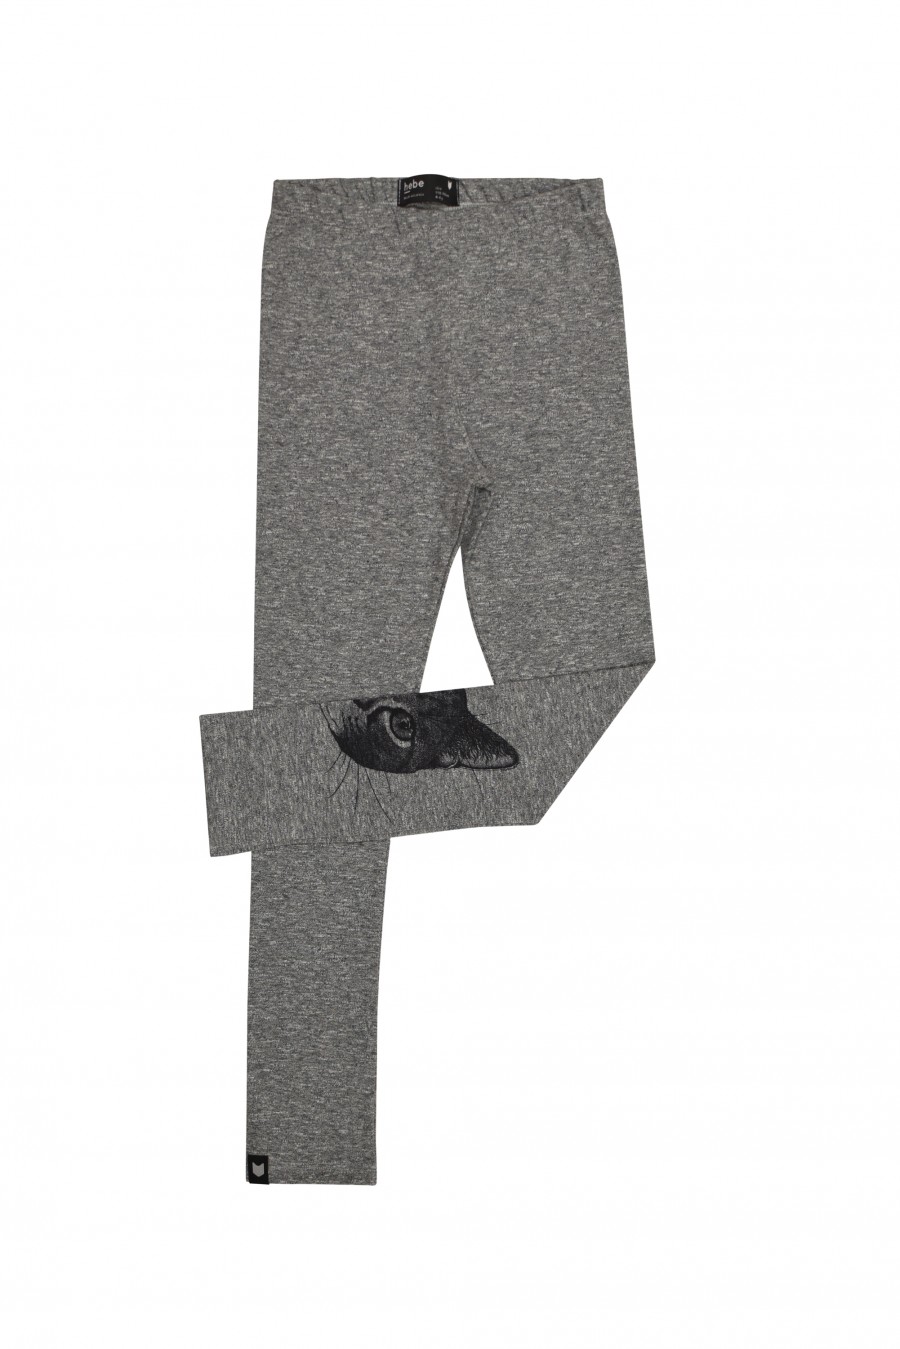 Grey leggings with cat FW18157